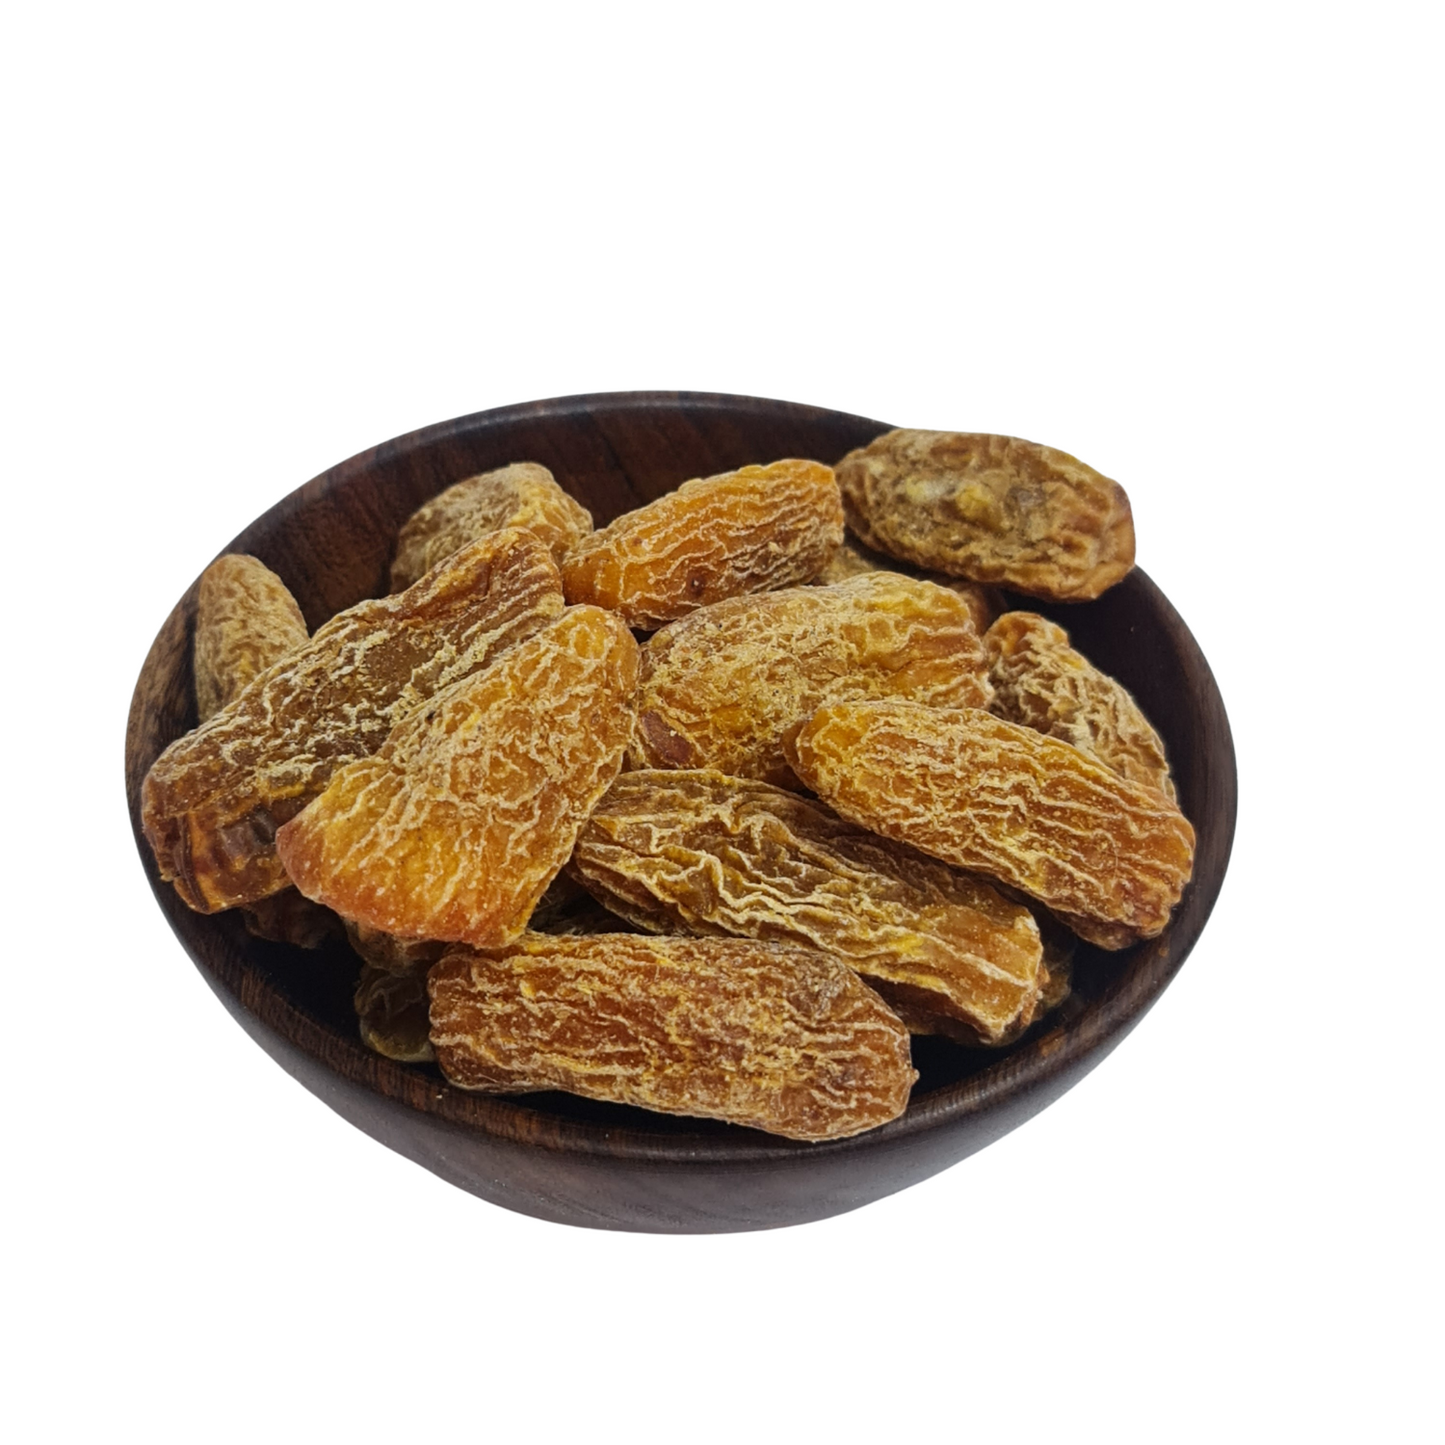 Dried dates - खारीक